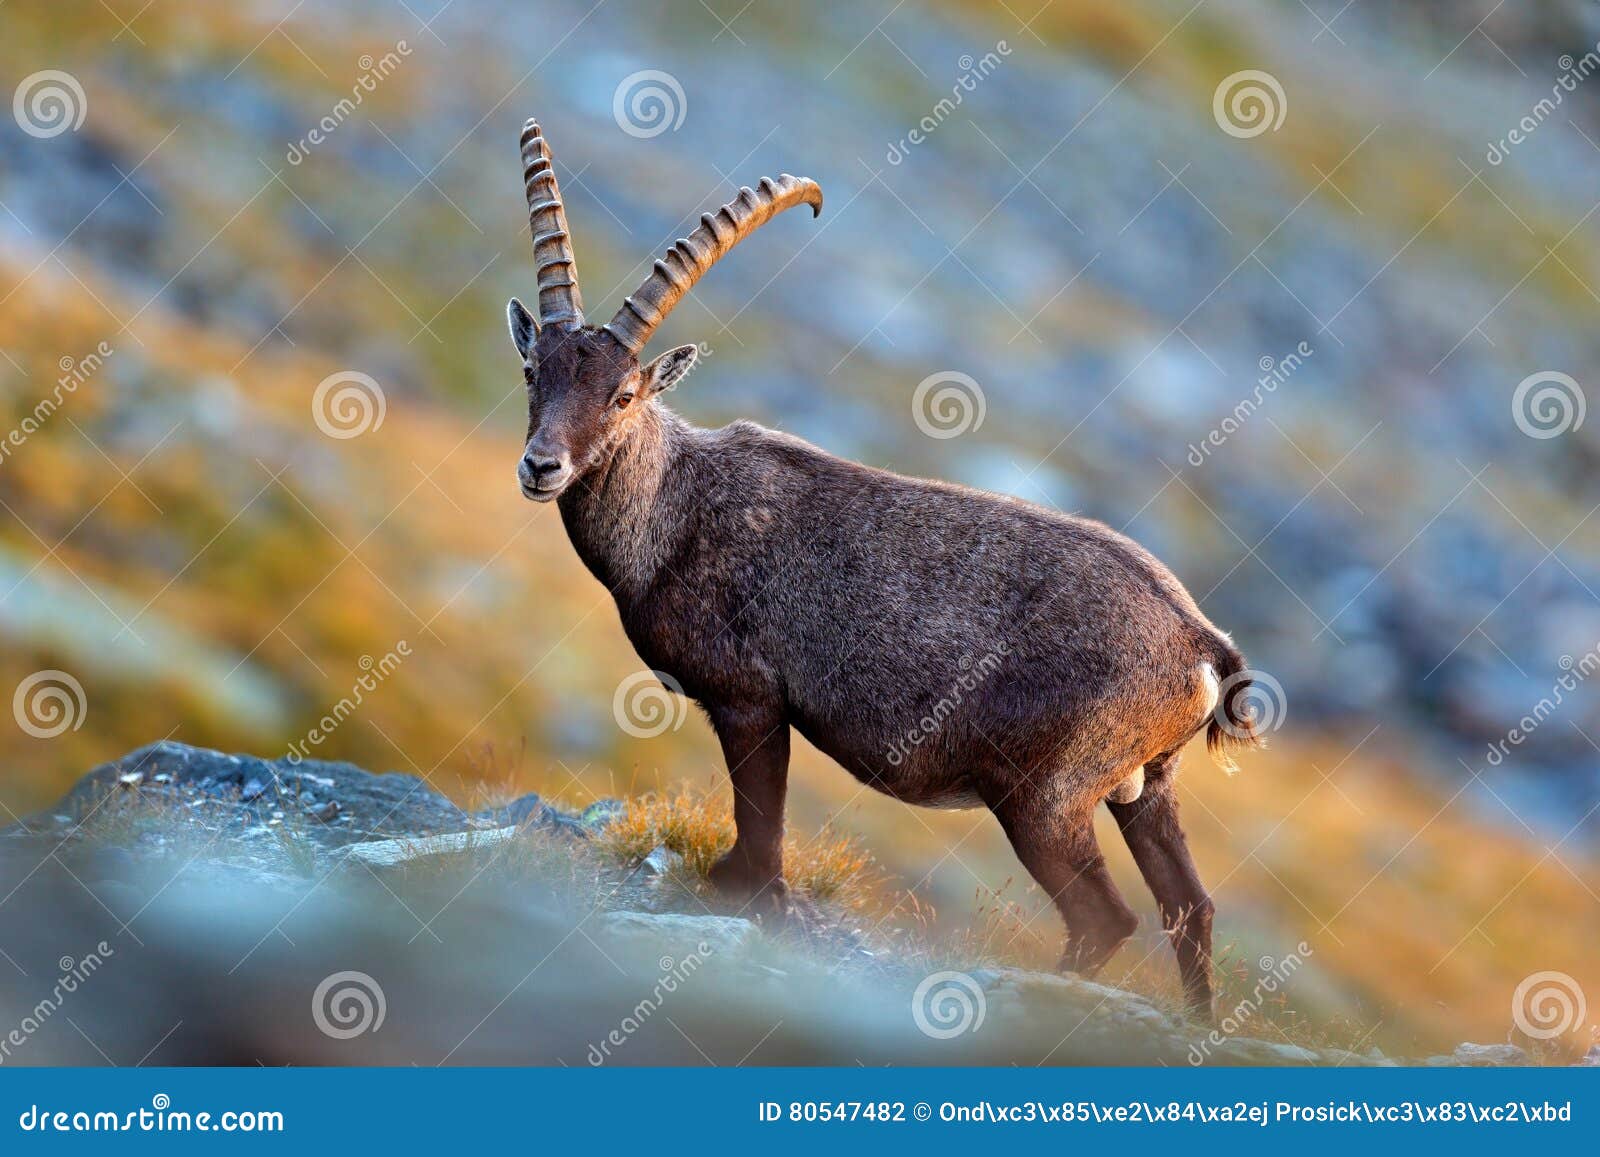 animal from the alp. antler alpine ibex, capra ibex, scratching